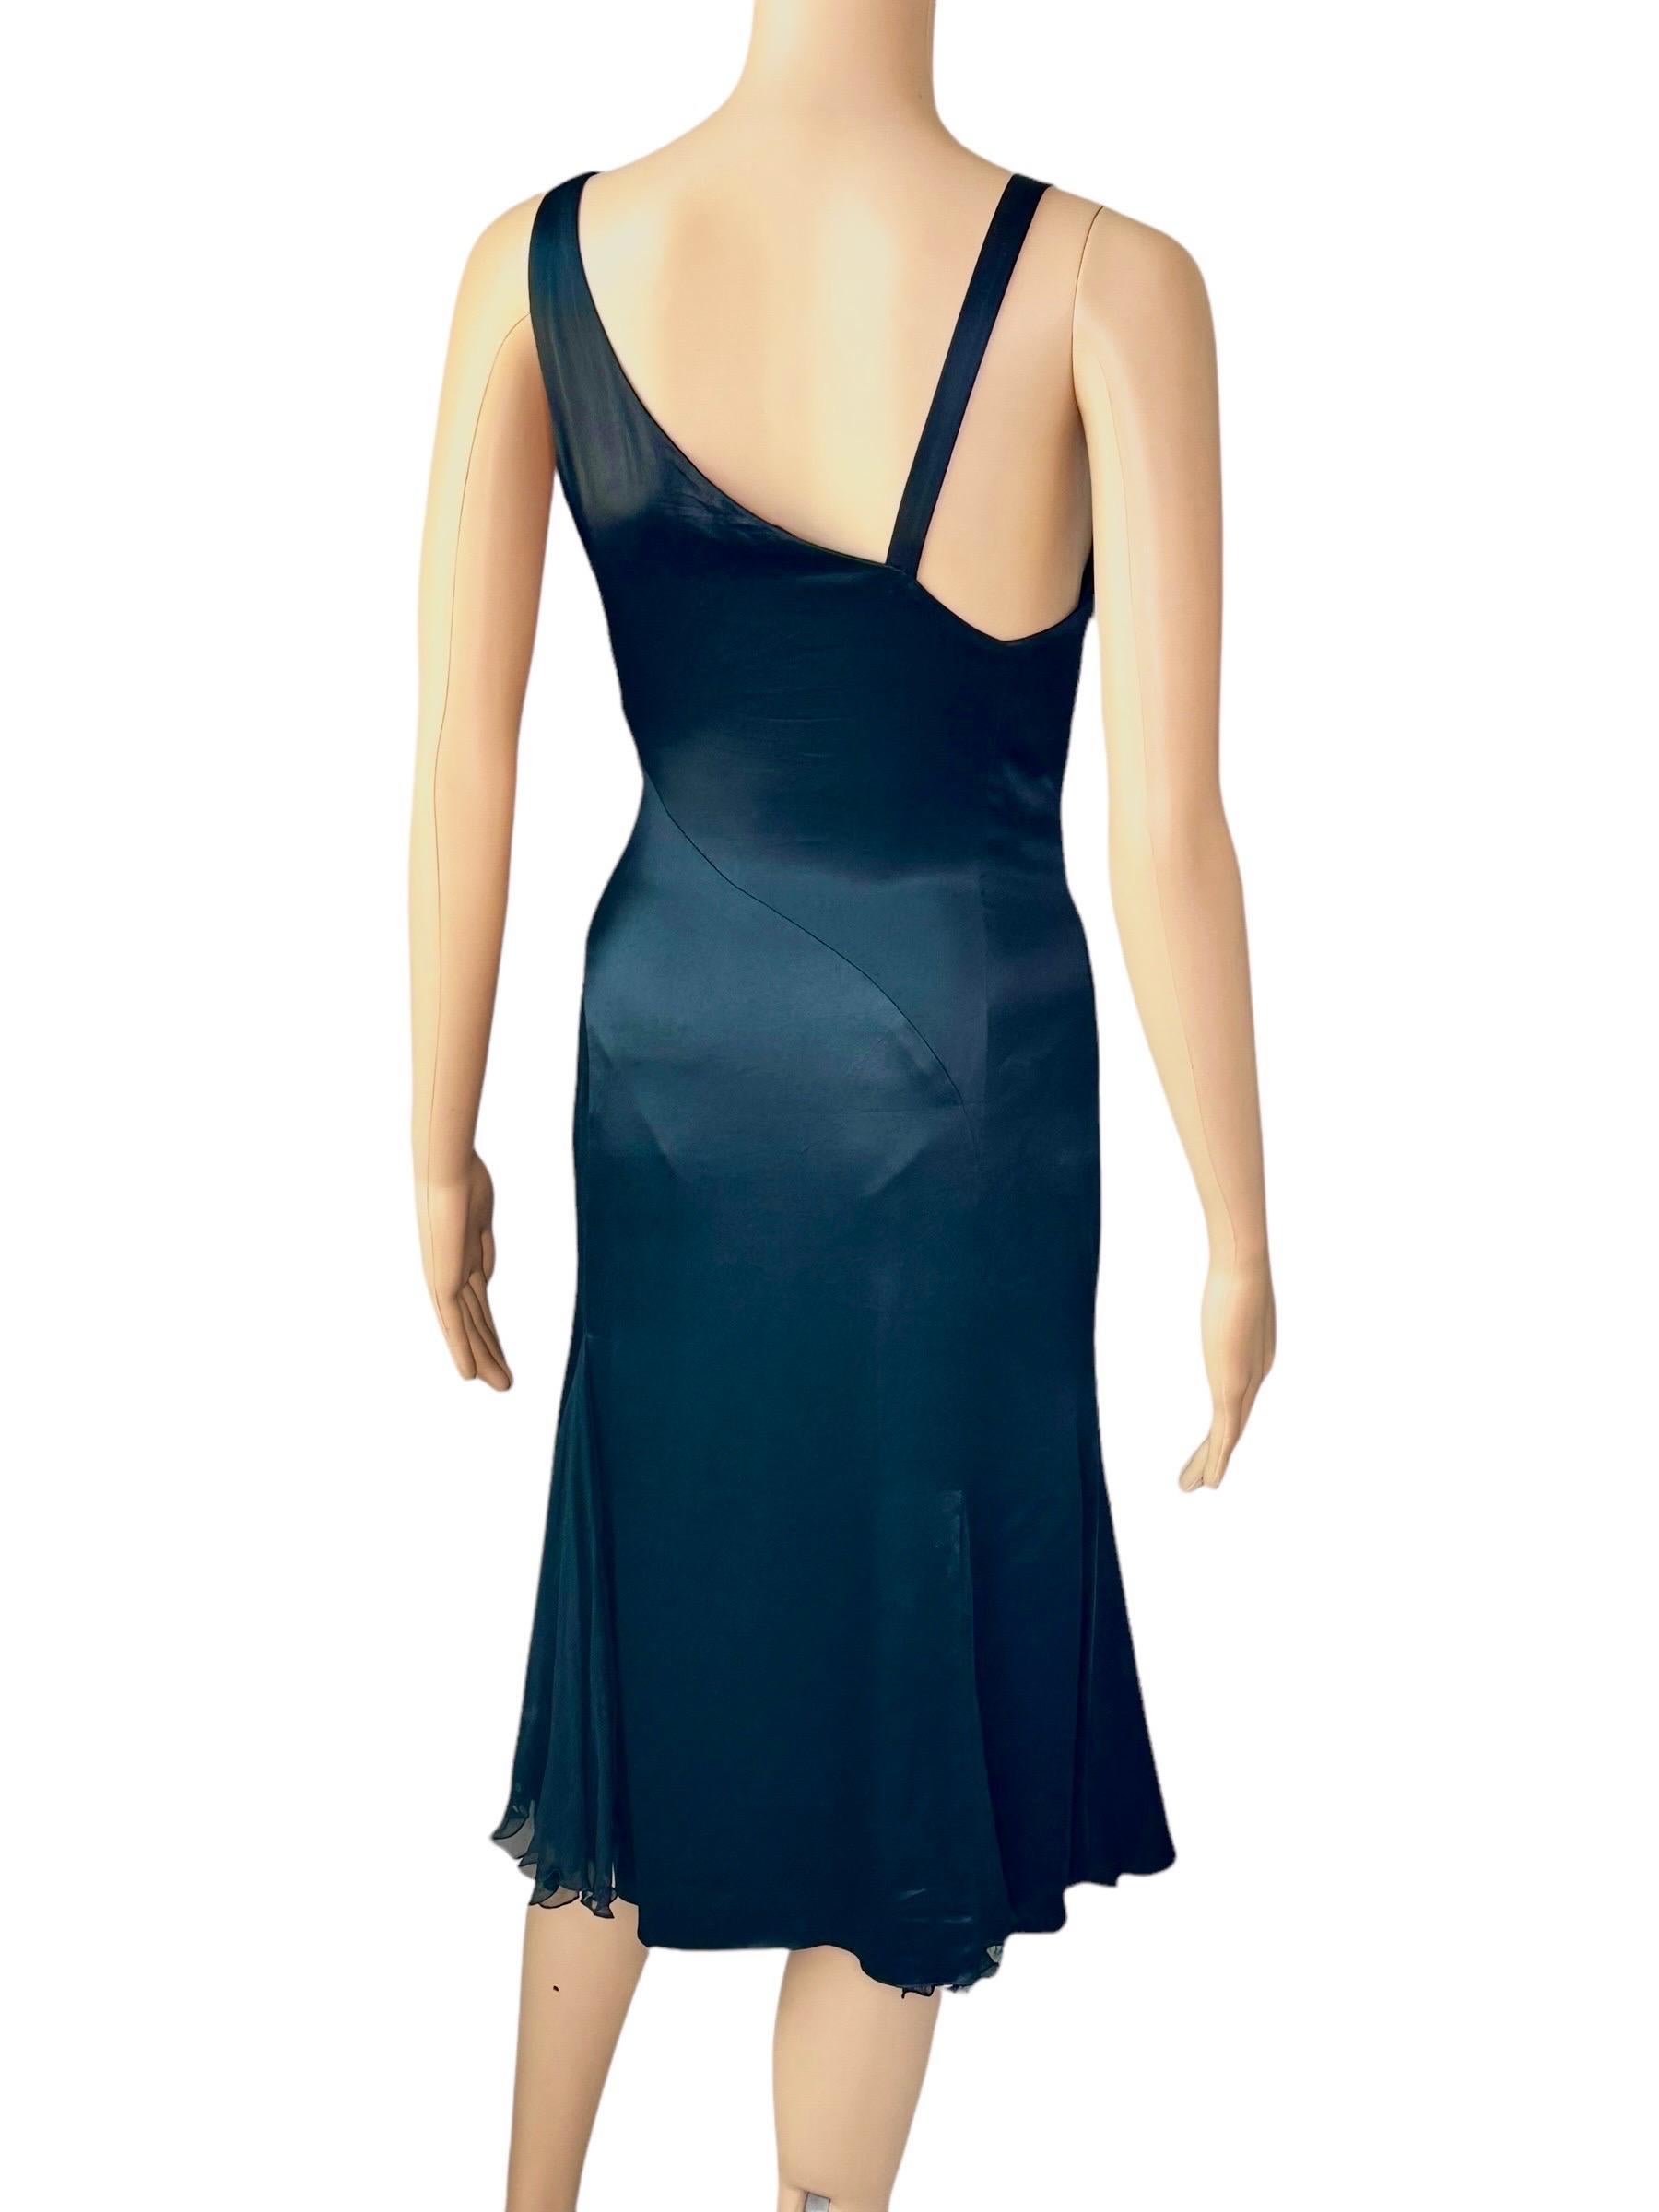 Versace F/W 2004 Embellished Buckle Studded Detail Plunging Black Evening Dress For Sale 7